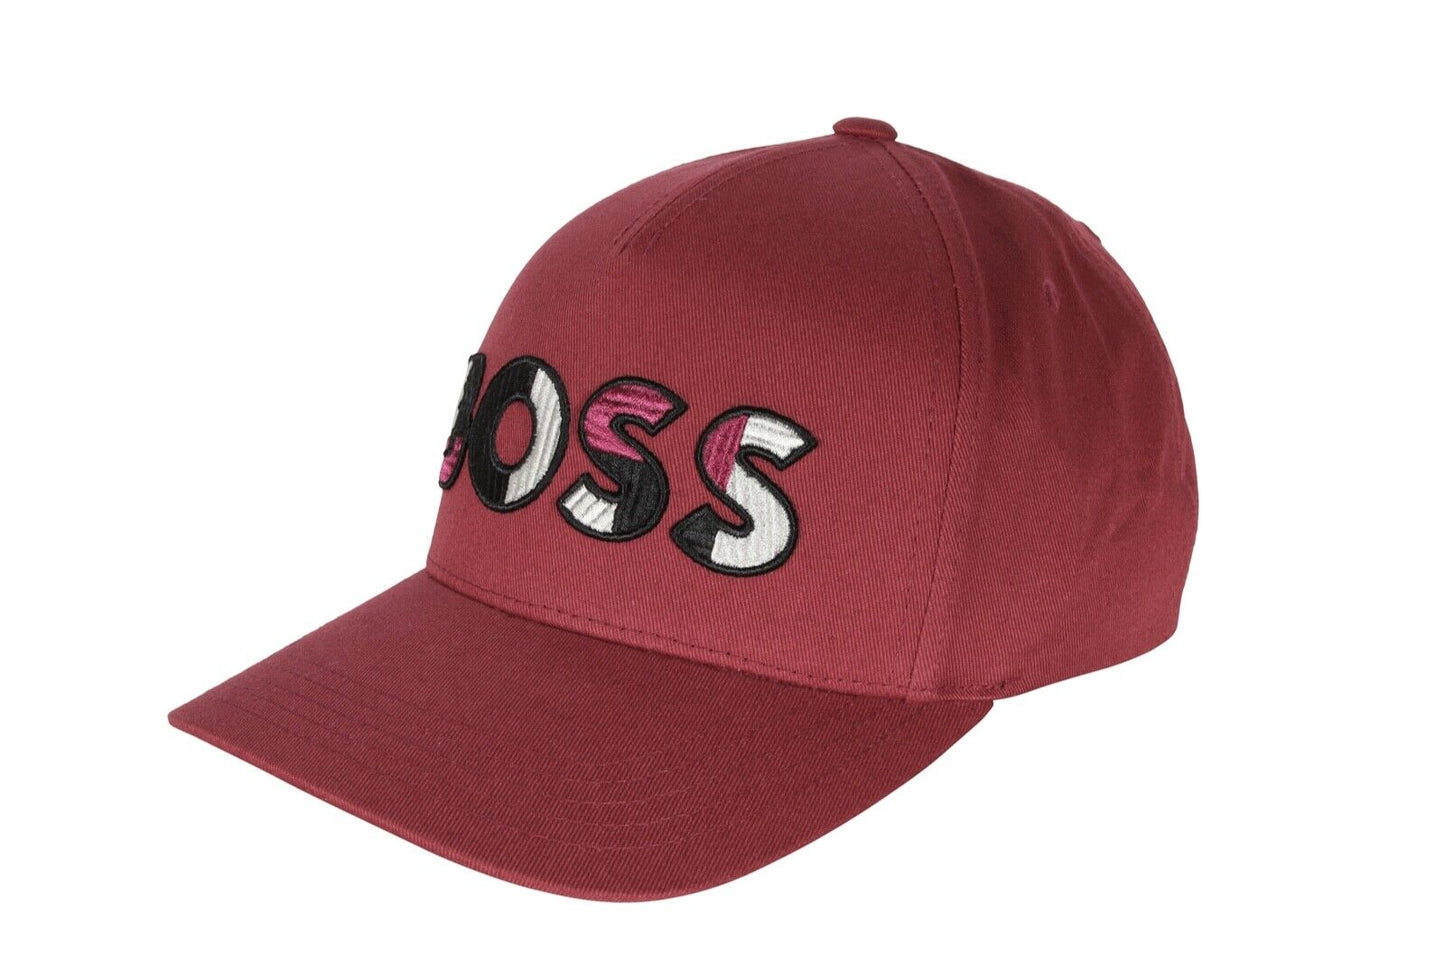 HUGO BOSS Sevile-Boss-2 Men’s Cotton-Twill Cap with Logo in Red 50471927 673